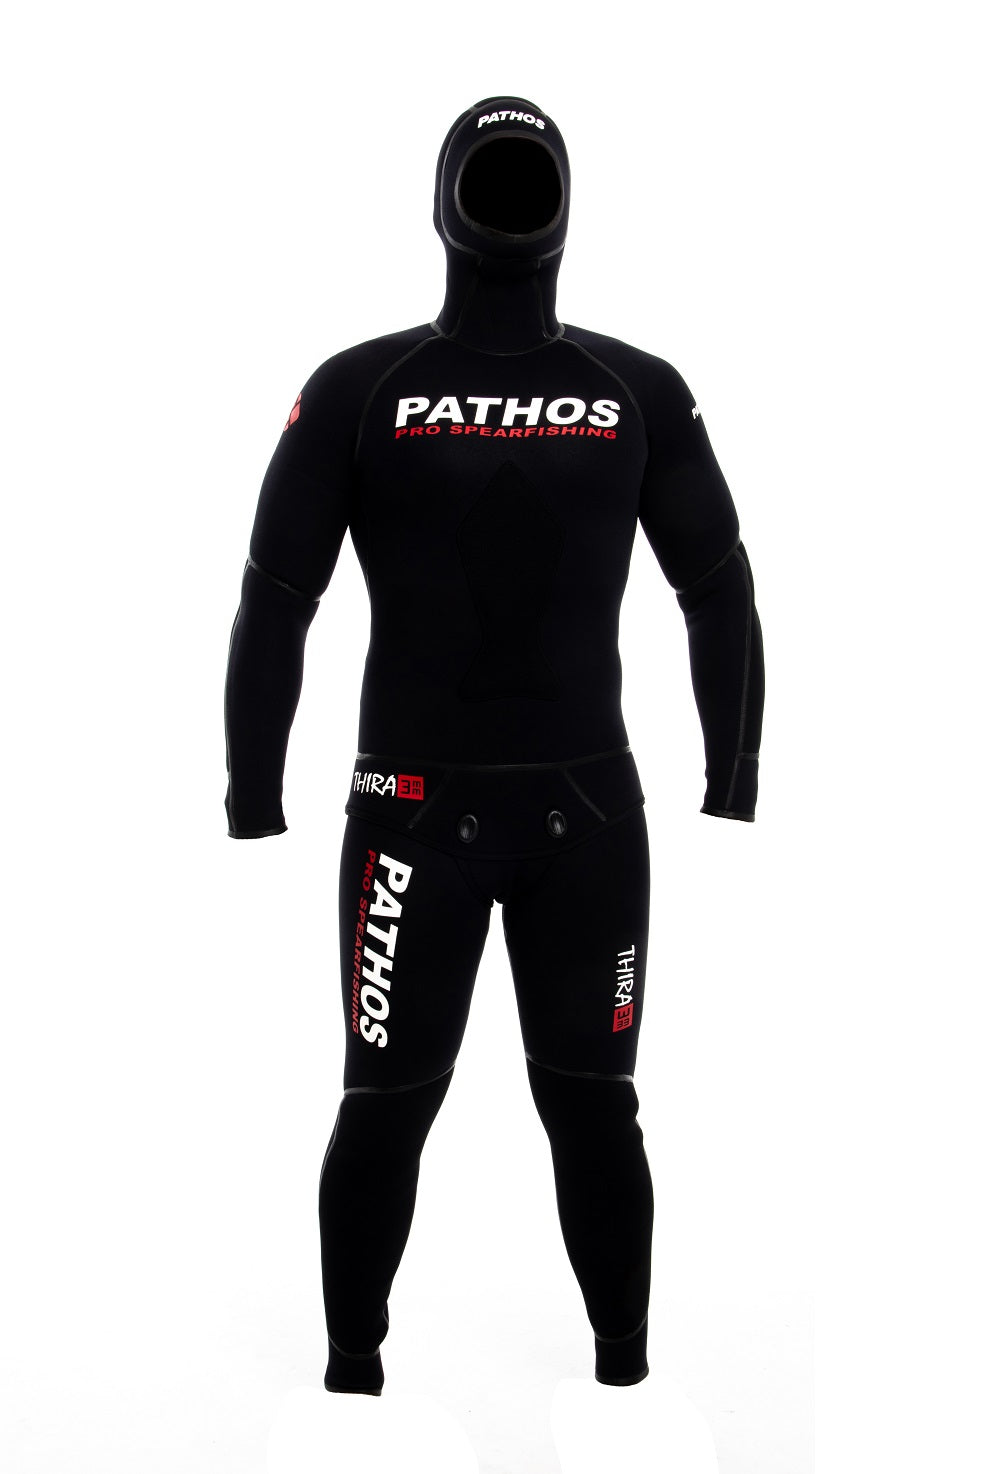 Pathos Thira Black Wetsuit - 7mm